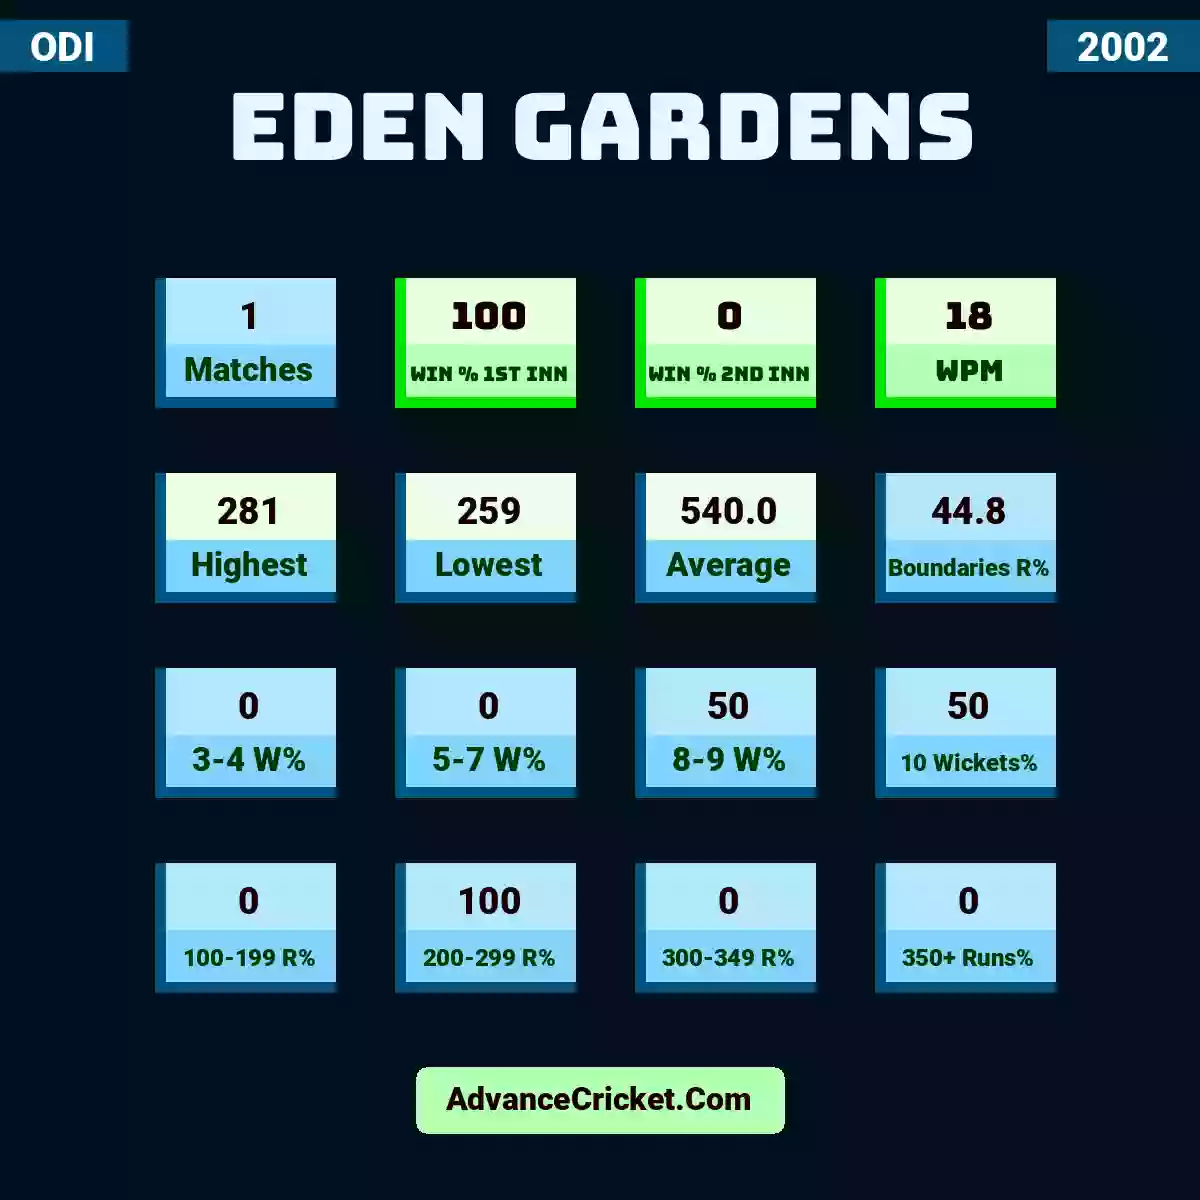 Image showing Eden Gardens with Matches: 1, Win % 1st Inn: 100, Win % 2nd Inn: 0, WPM: 18, Highest: 281, Lowest: 259, Average: 540.0, Boundaries R%: 44.8, 3-4 W%: 0, 5-7 W%: 0, 8-9 W%: 50, 10 Wickets%: 50, 100-199 R%: 0, 200-299 R%: 100, 300-349 R%: 0, 350+ Runs%: 0.